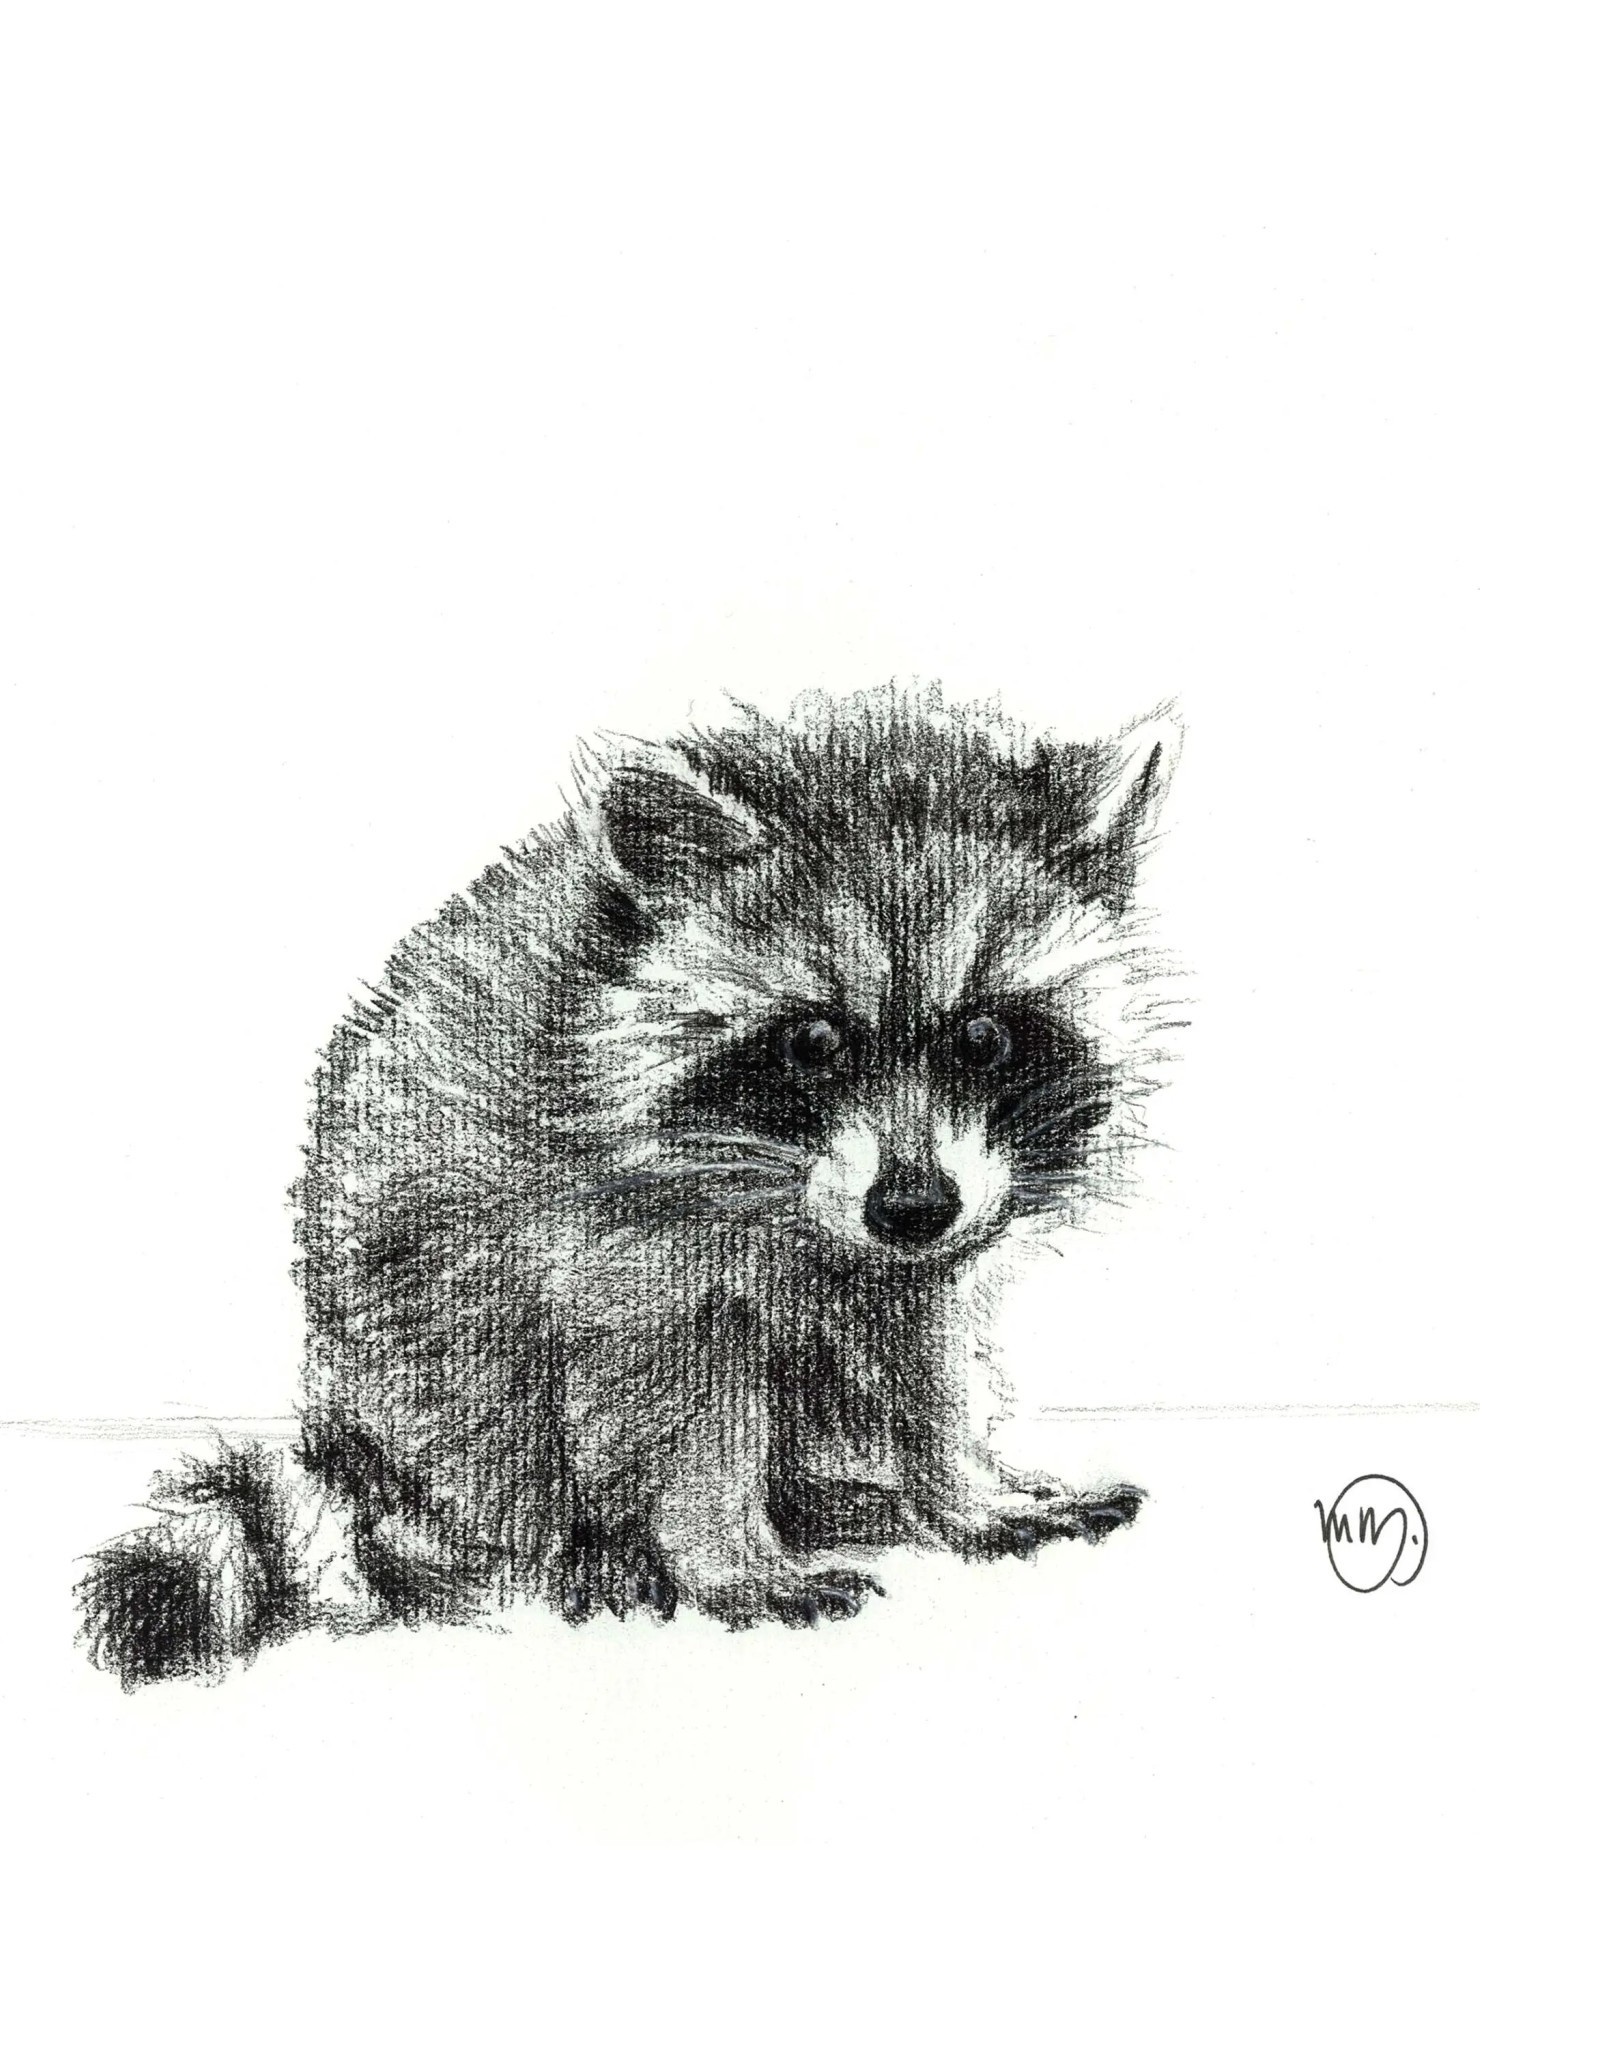 Le Nid - Baby Raccoon Greeting Card